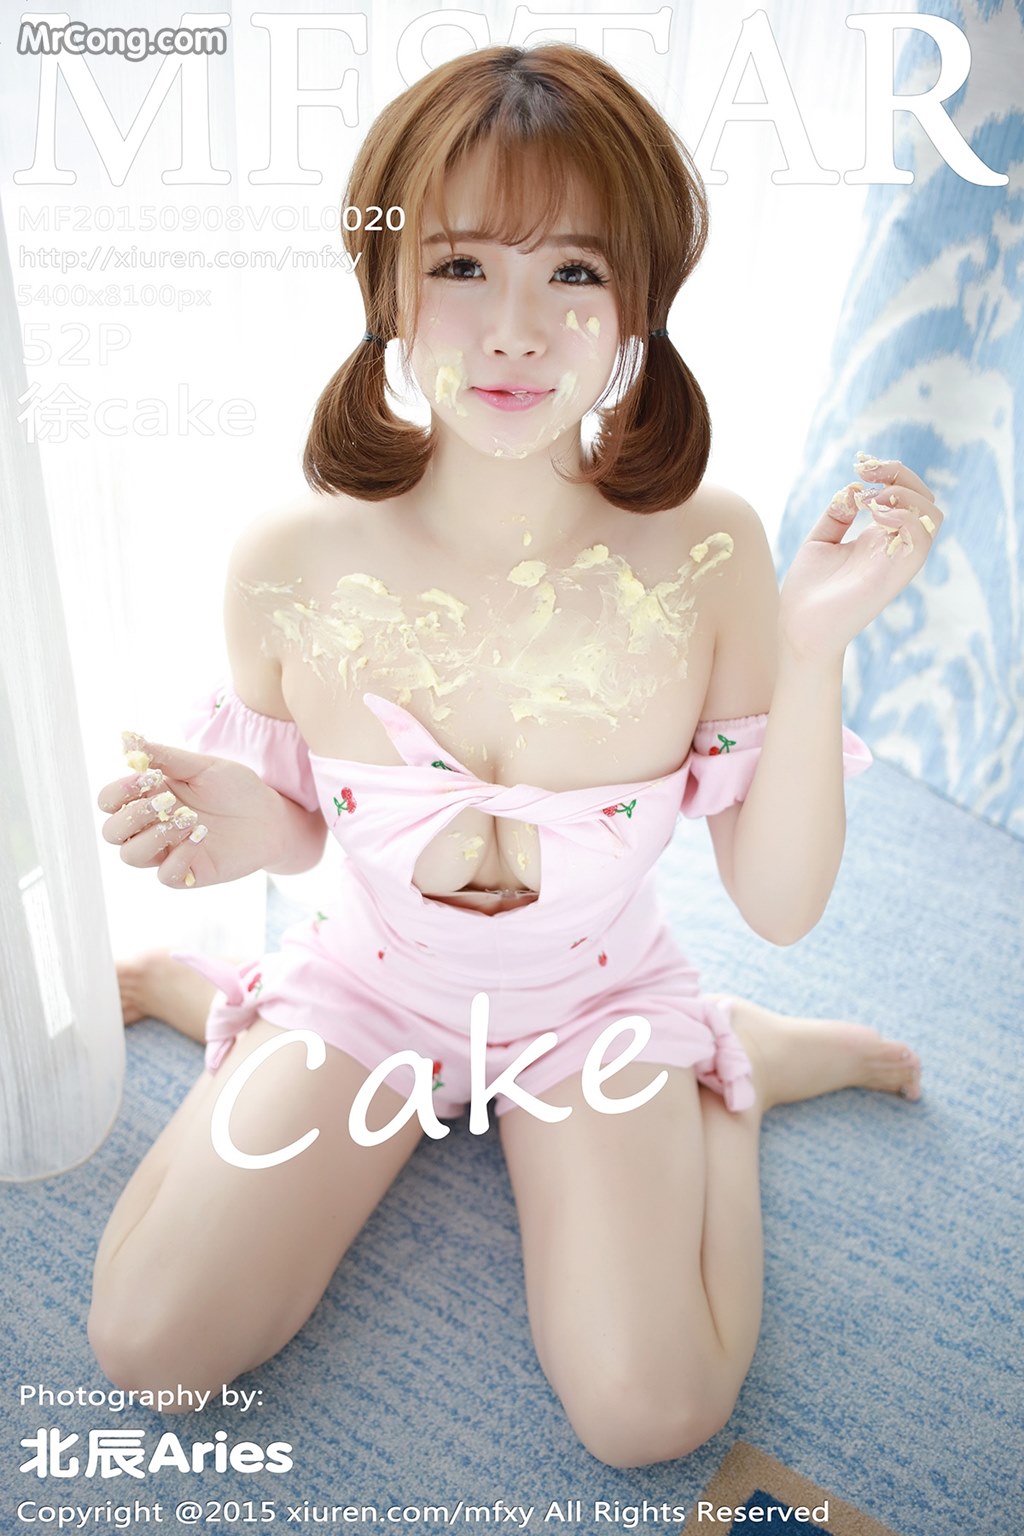 MFStar Vol.020: Model Xu Cake (徐 cake) (52 photos) photo 1-0